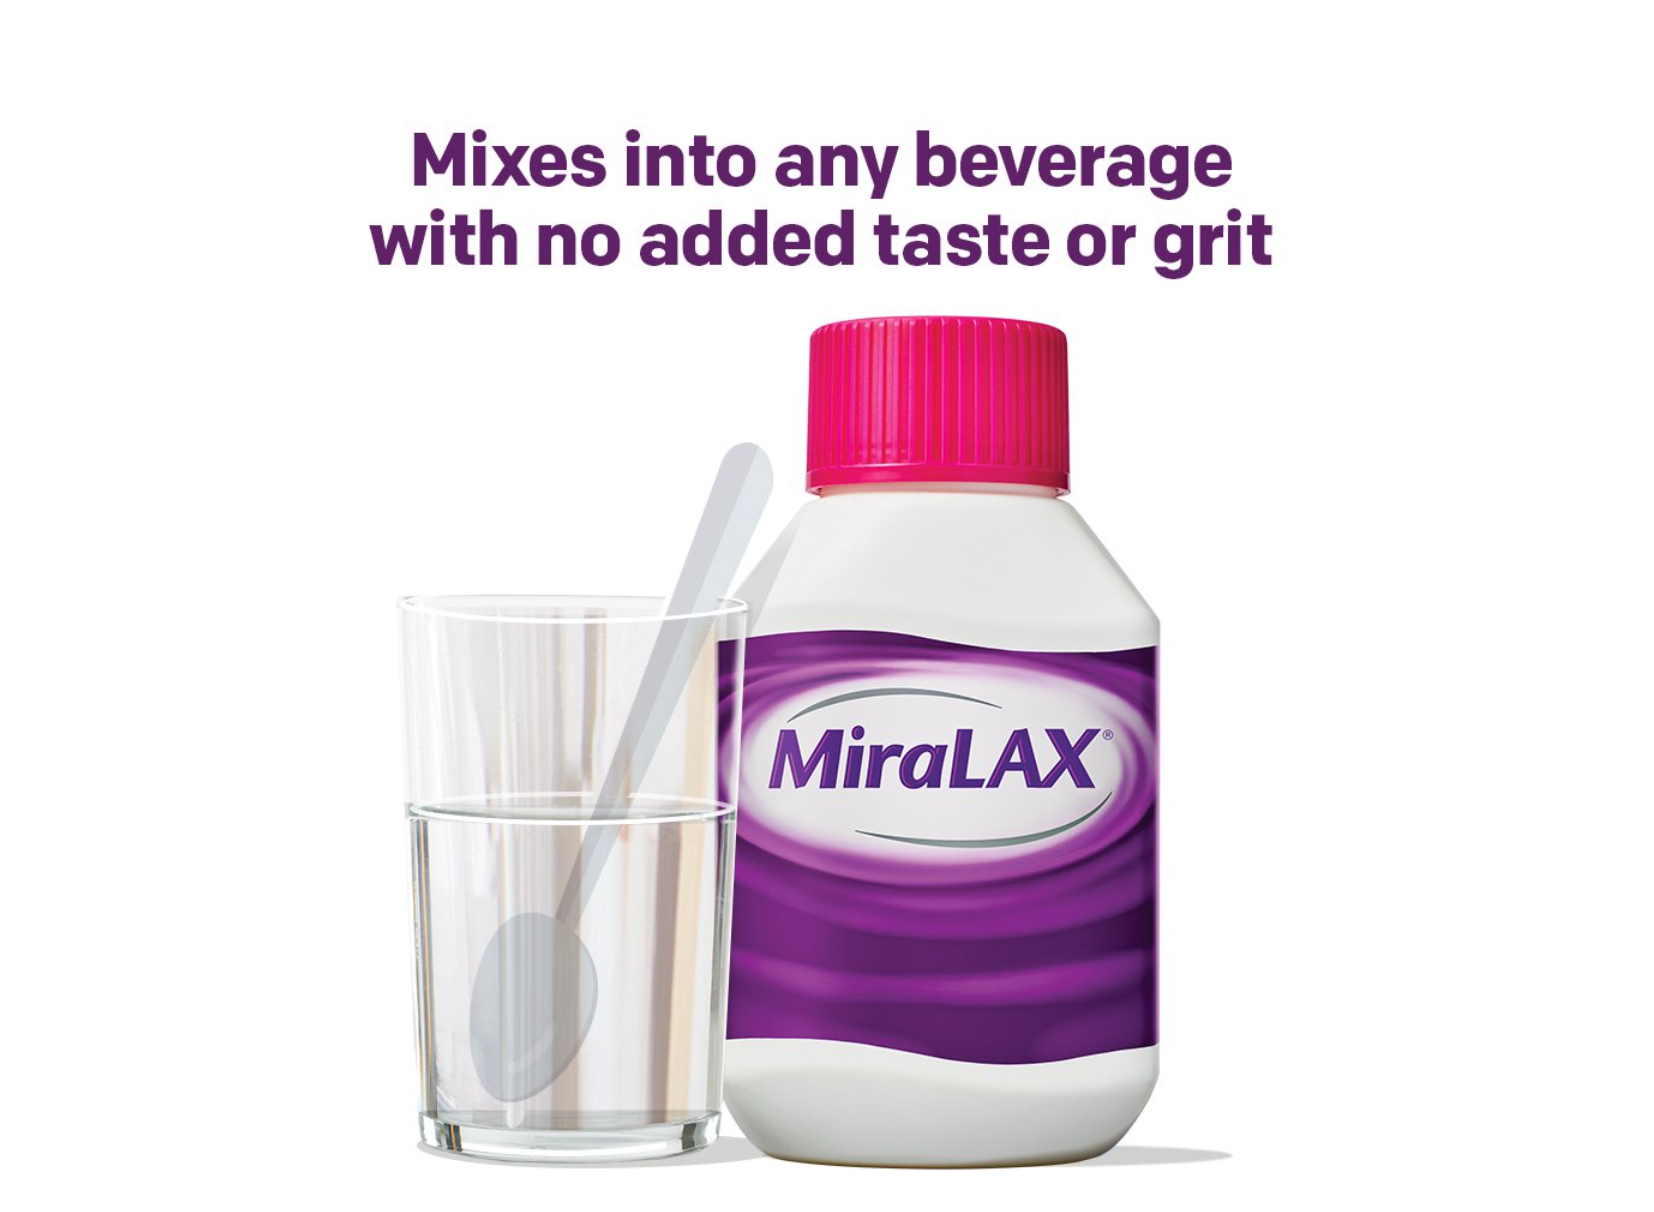 Miralax Laxative Powder For Gentle